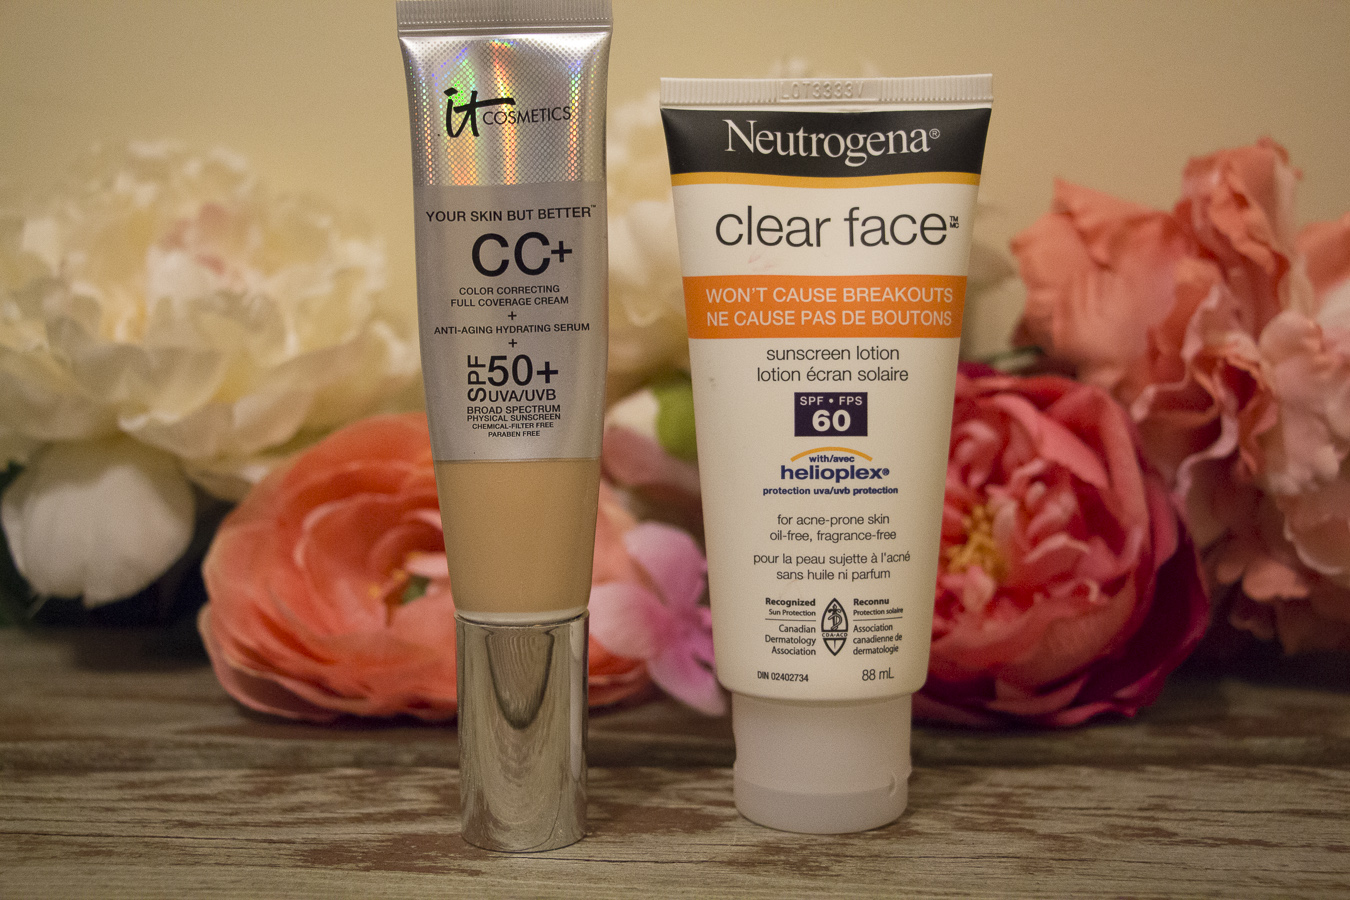 IT Cosmetics CC cream and Neutrogena clear face sunscreen